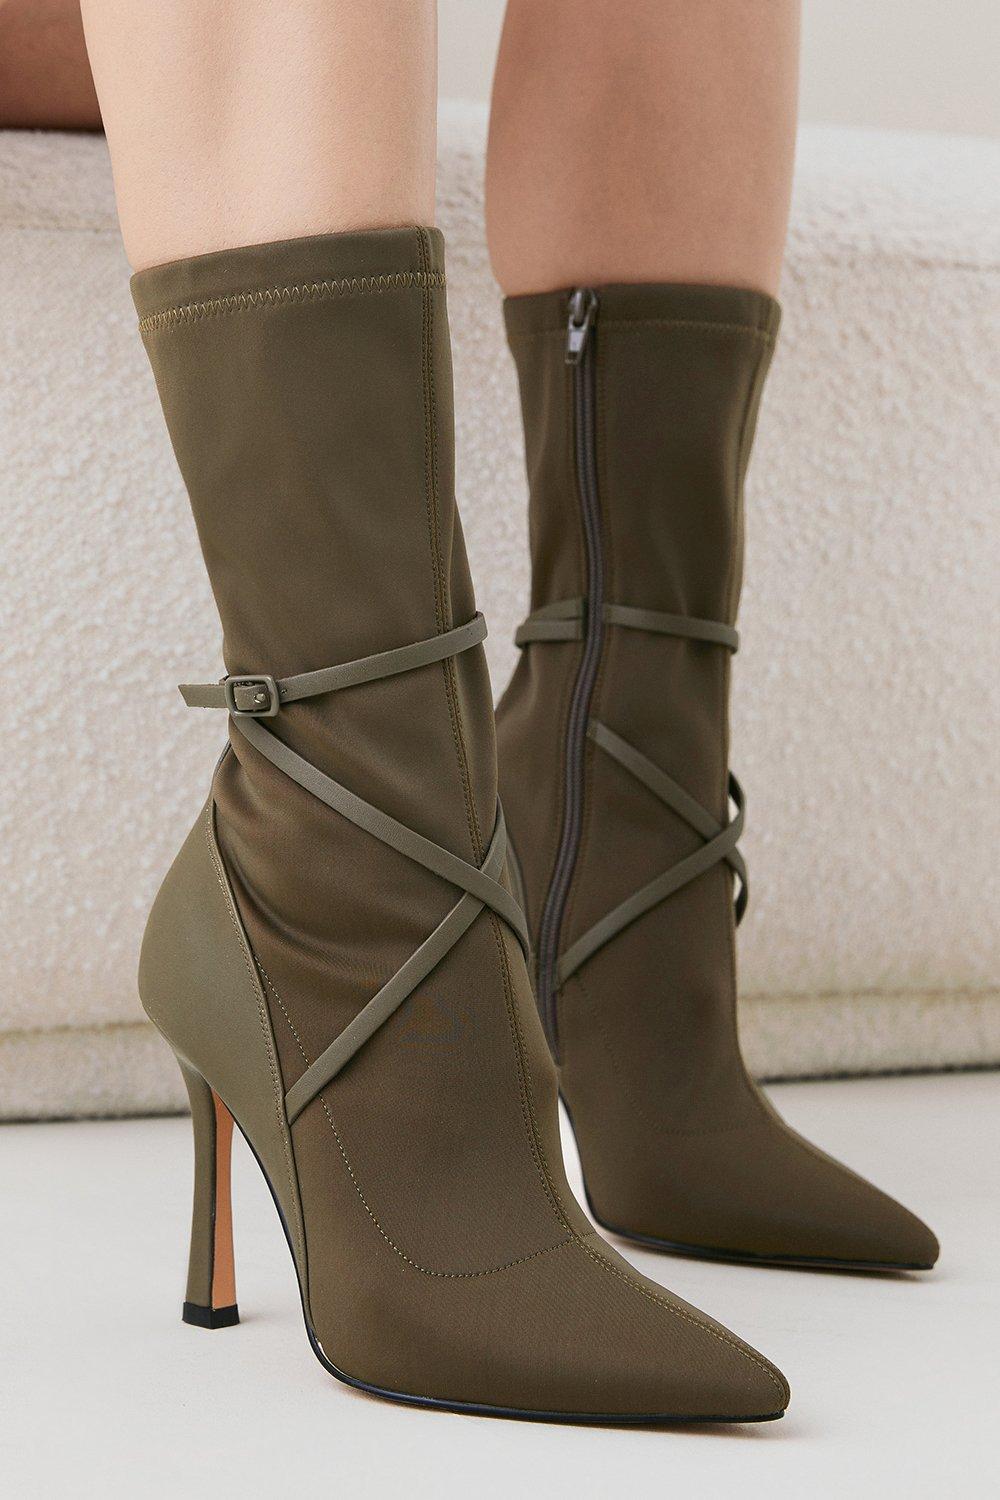 Women's High Heel Slip on Sandals Open Toe Pumps Shoes Work Fashion Office  Wedding Spring - Walmart.com